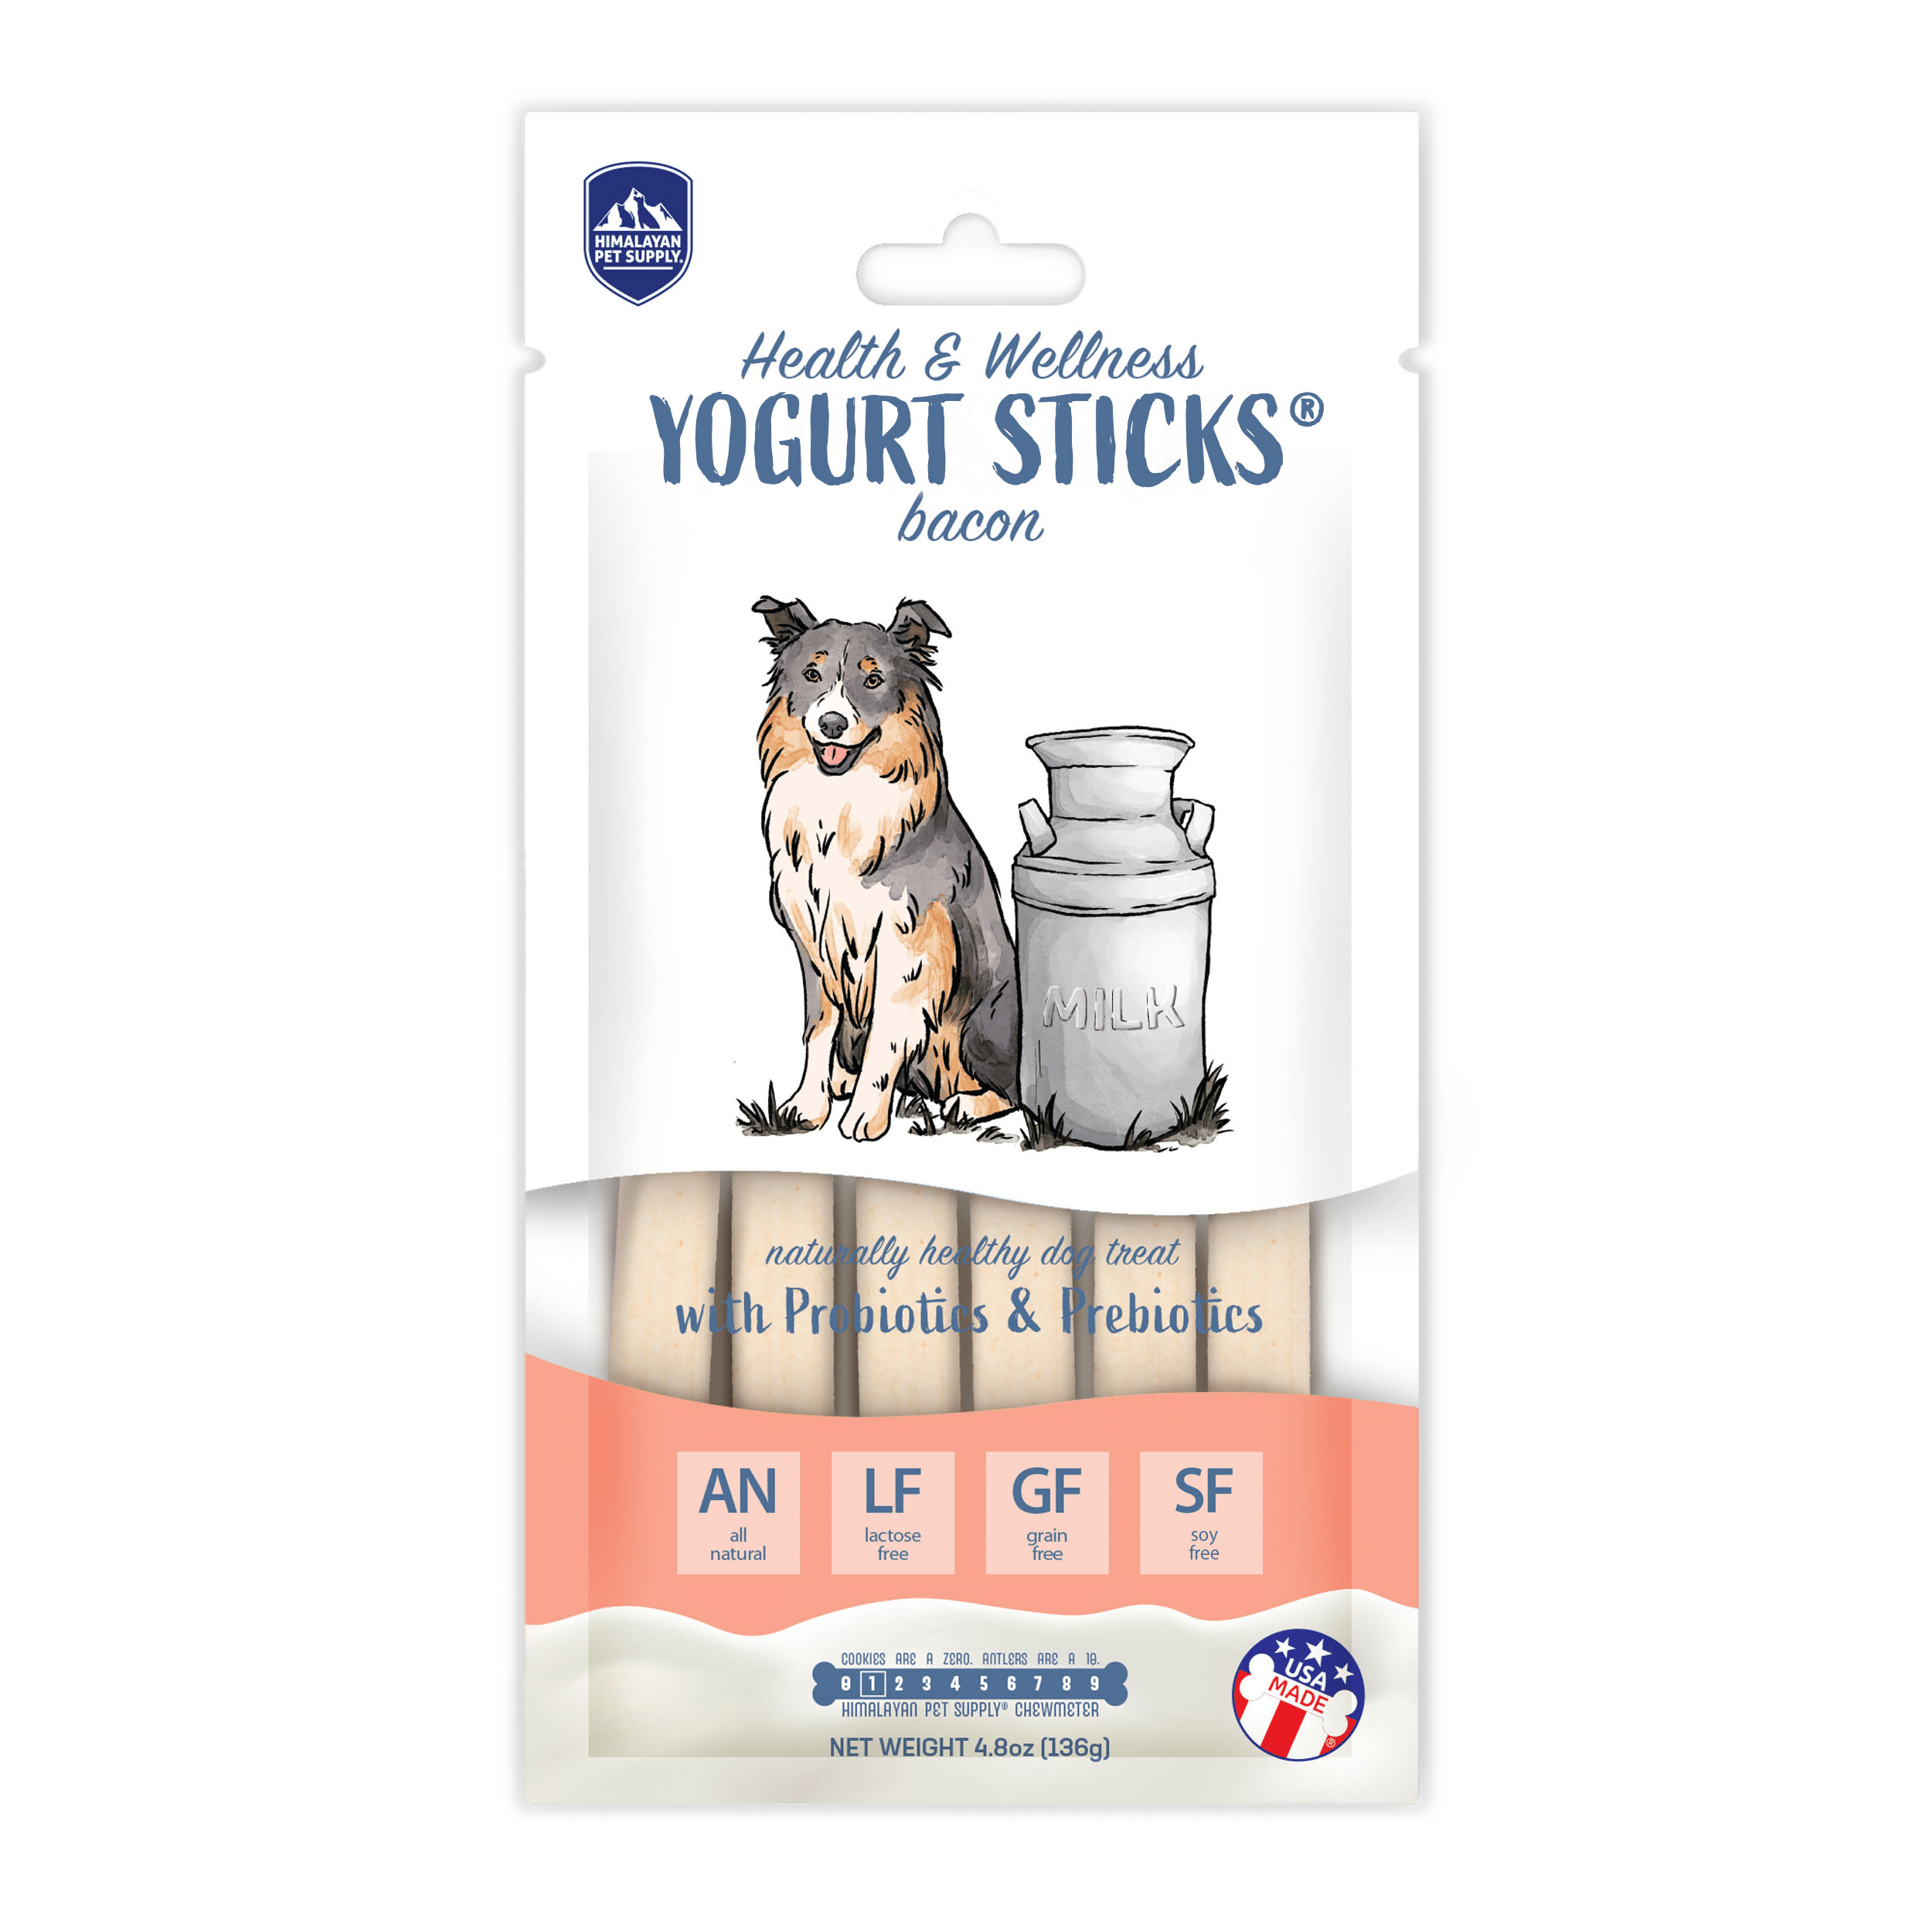 Bacon Yogurt Sticks